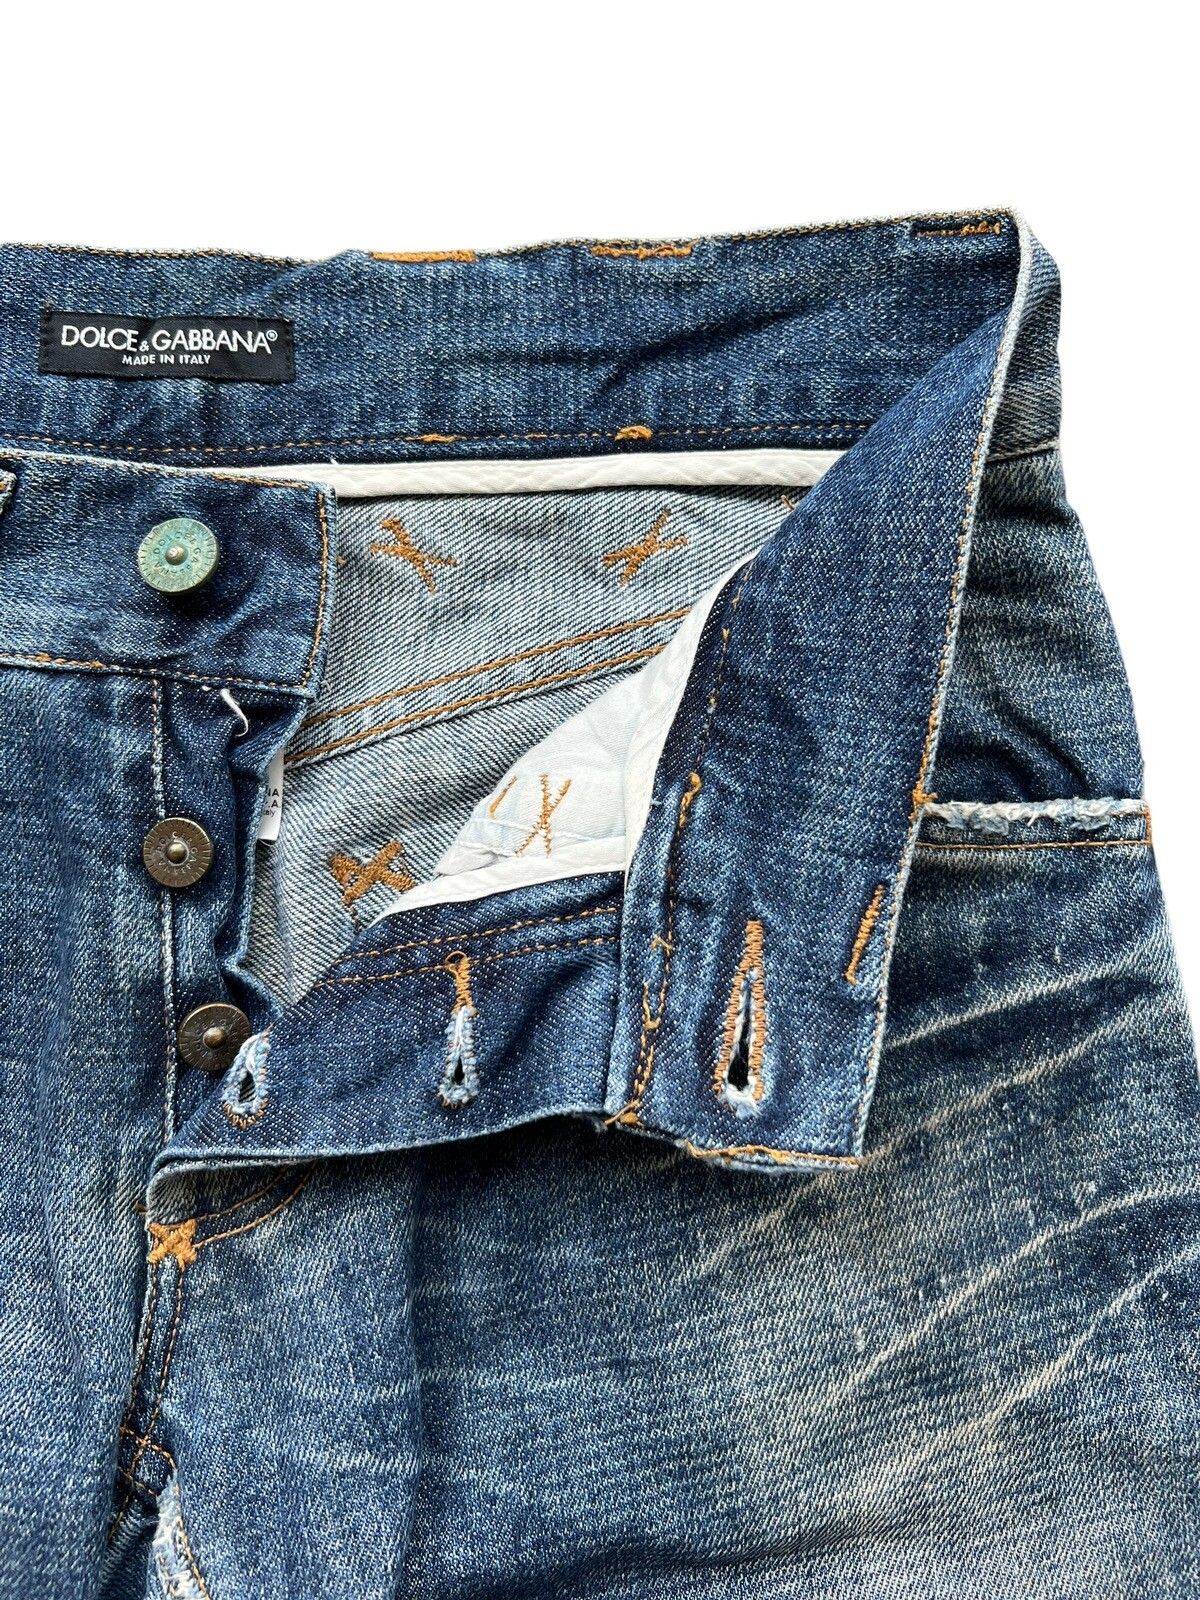 Dolce and Gabbana Crash Distressed Denim Jeans 31x32.5 - 12